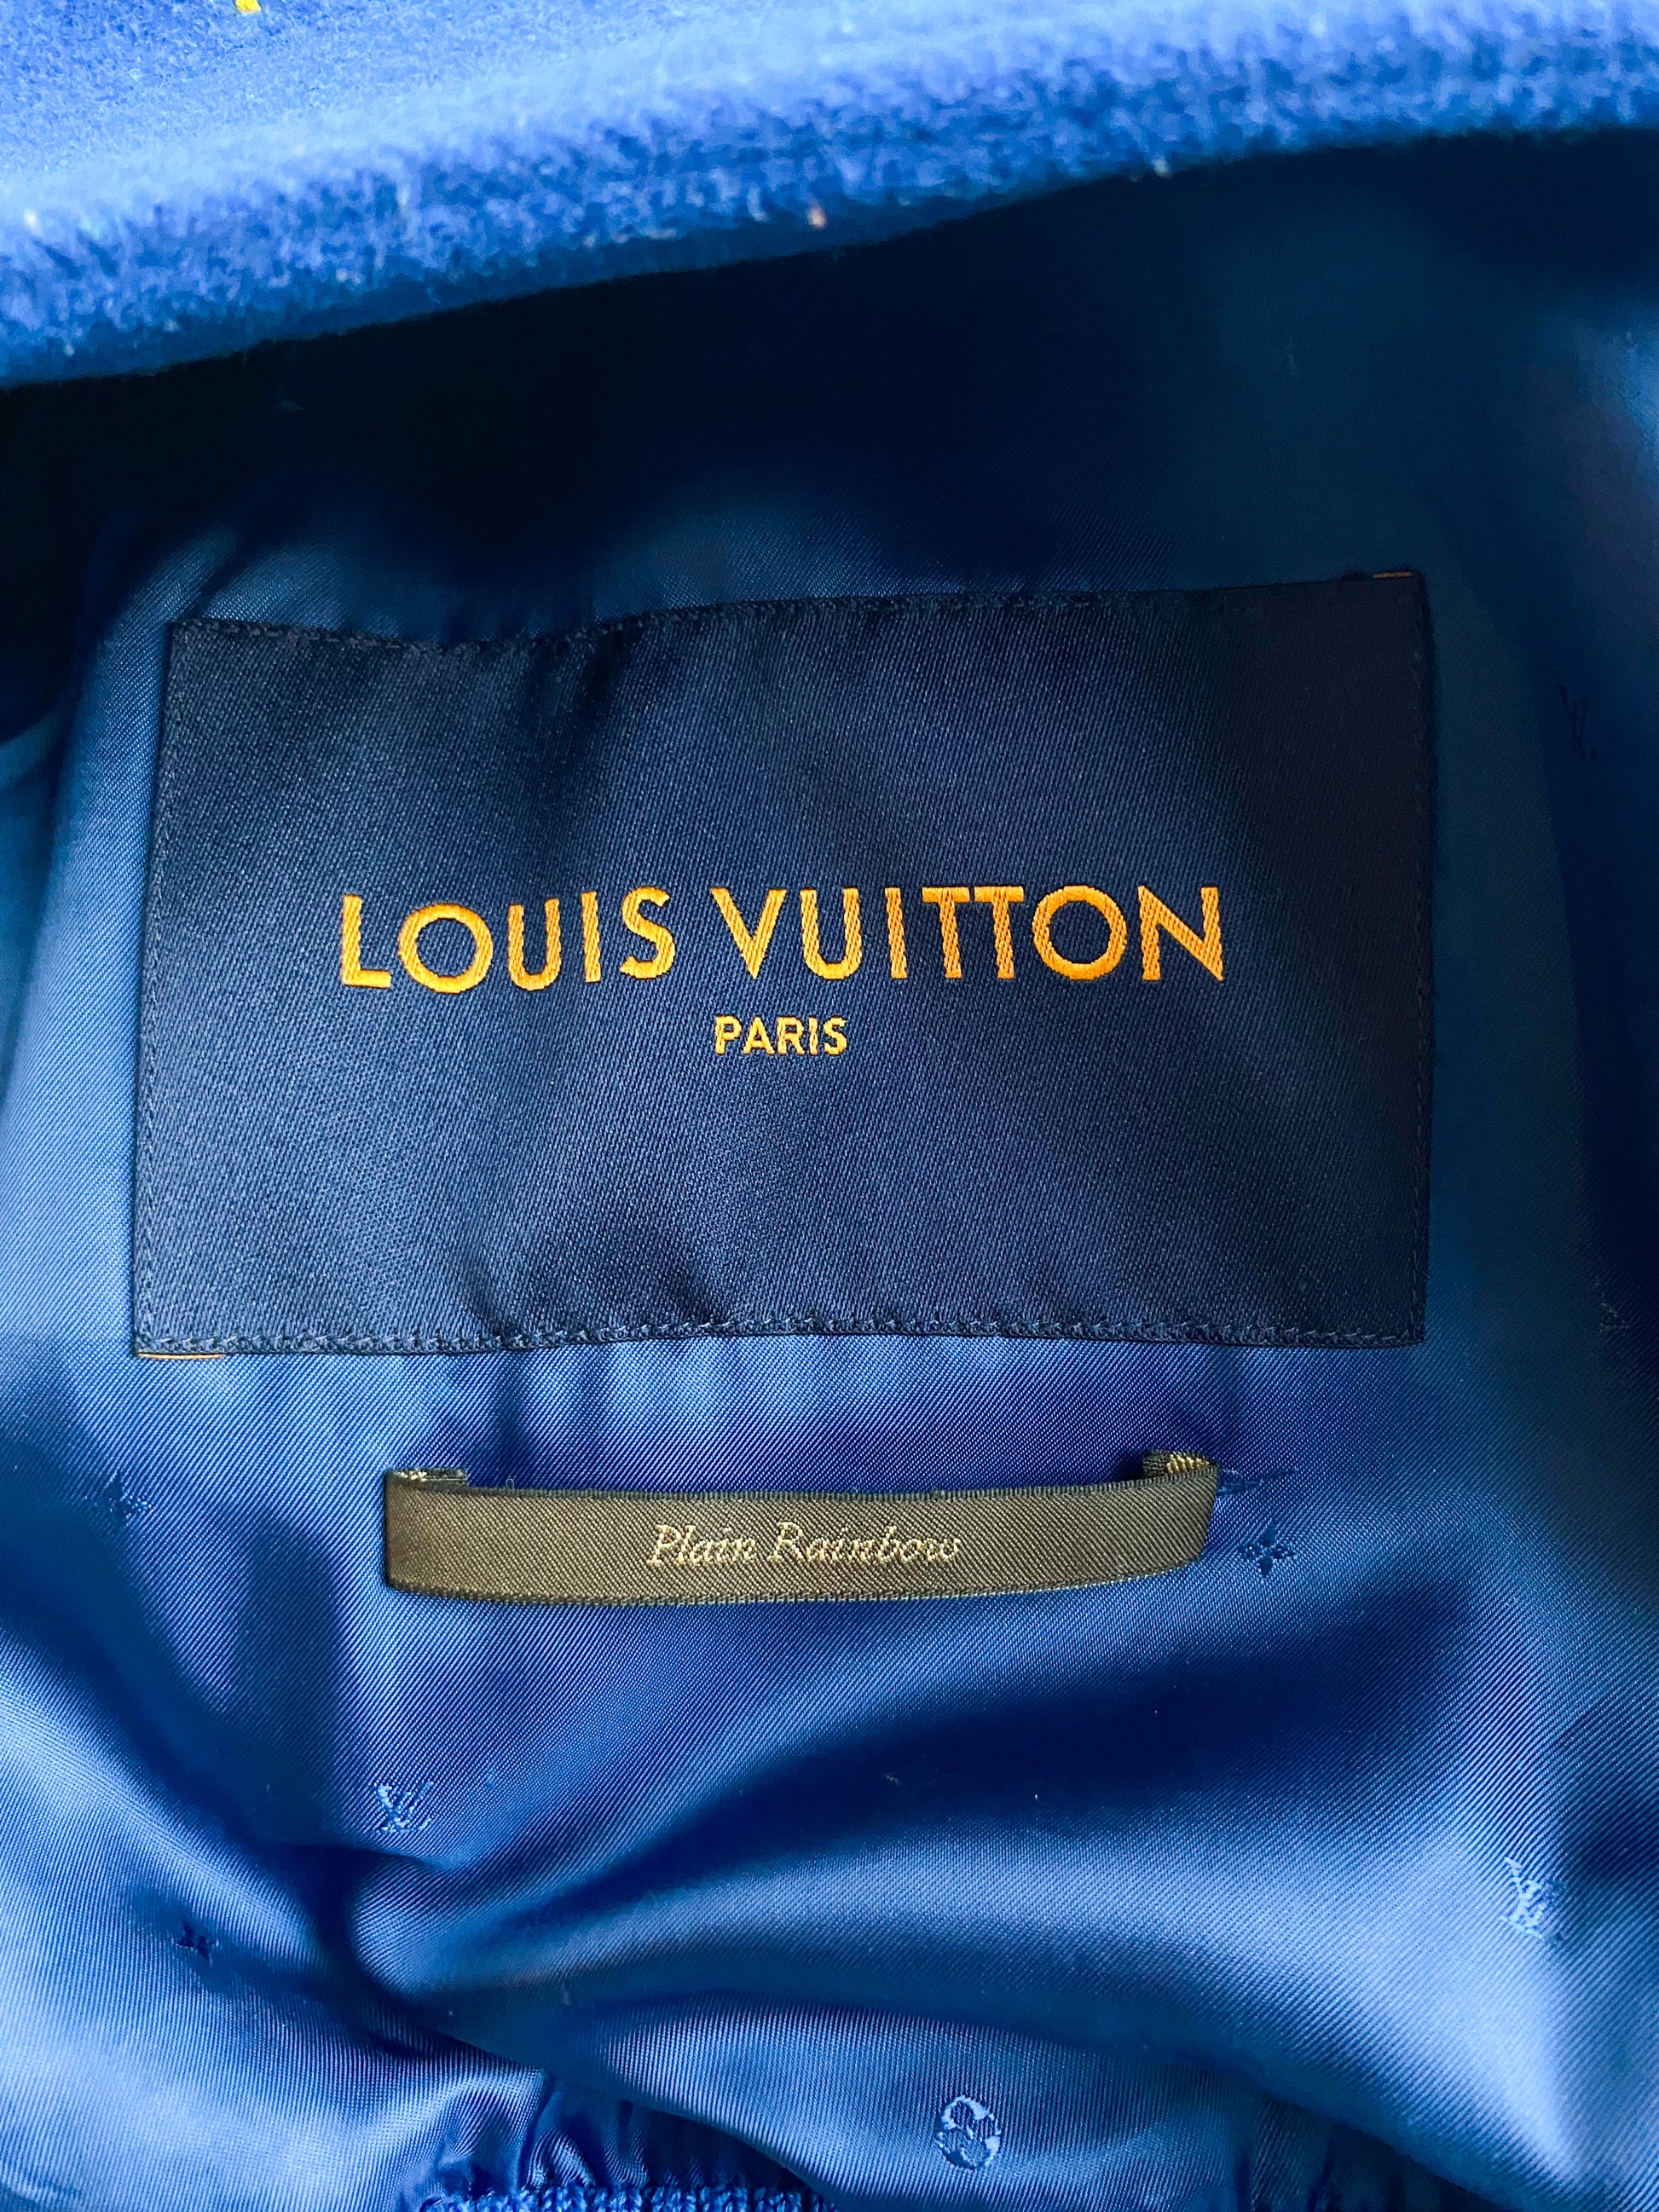 Review on Louis Vuitton Men's Jacket Varsity Wizard of Oz Jacket